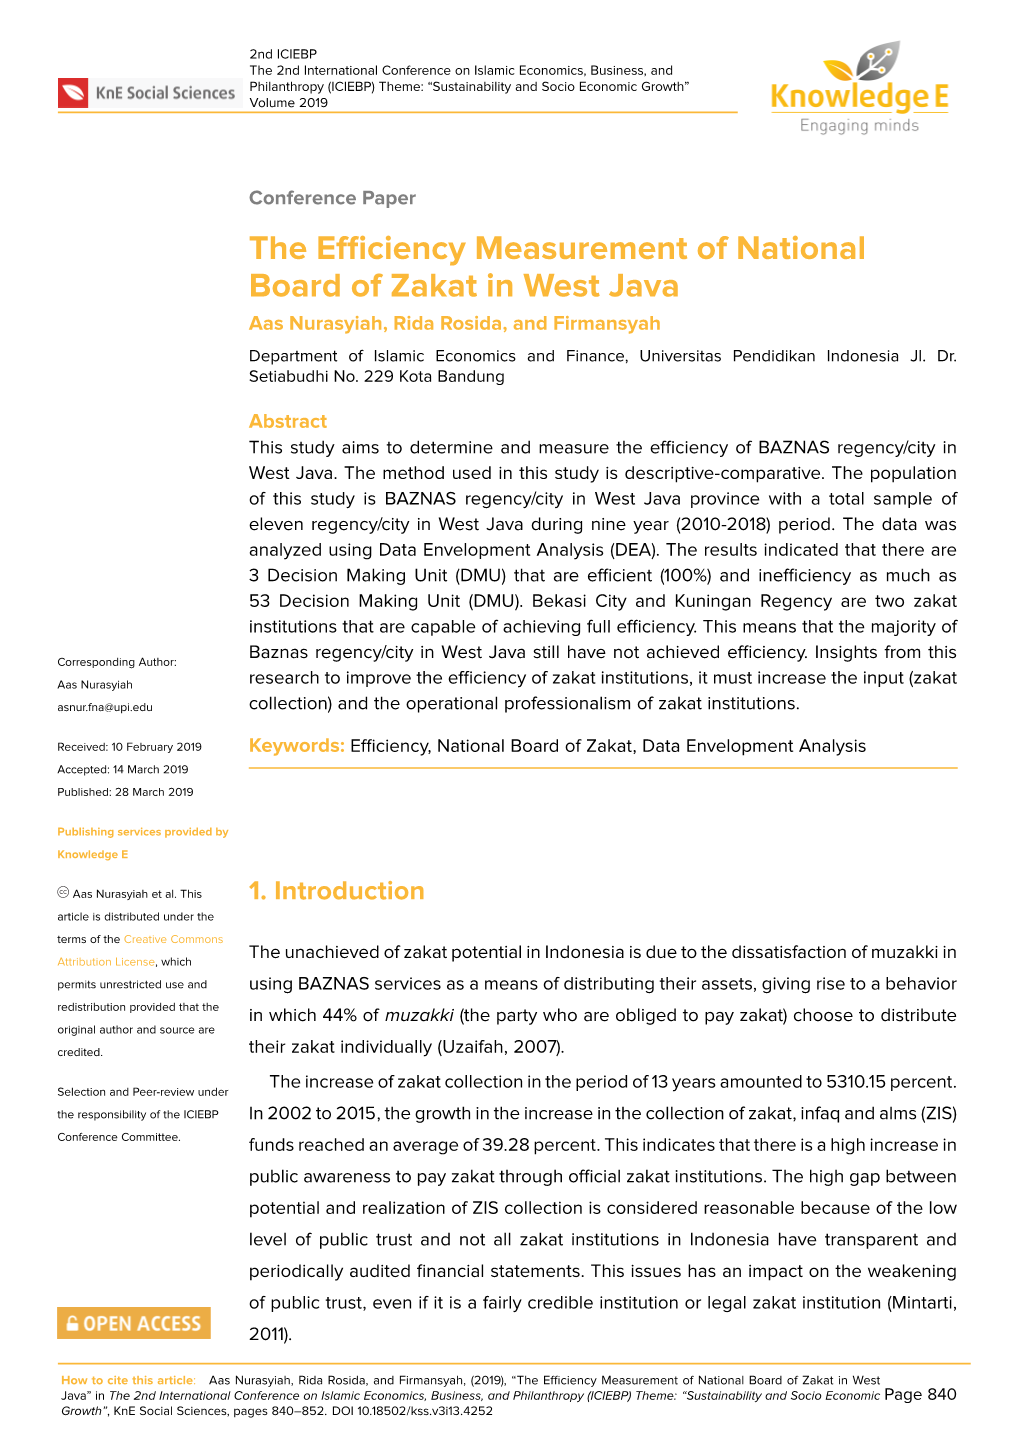 The Efficiency Measurement of National Board of Zakat in West Java